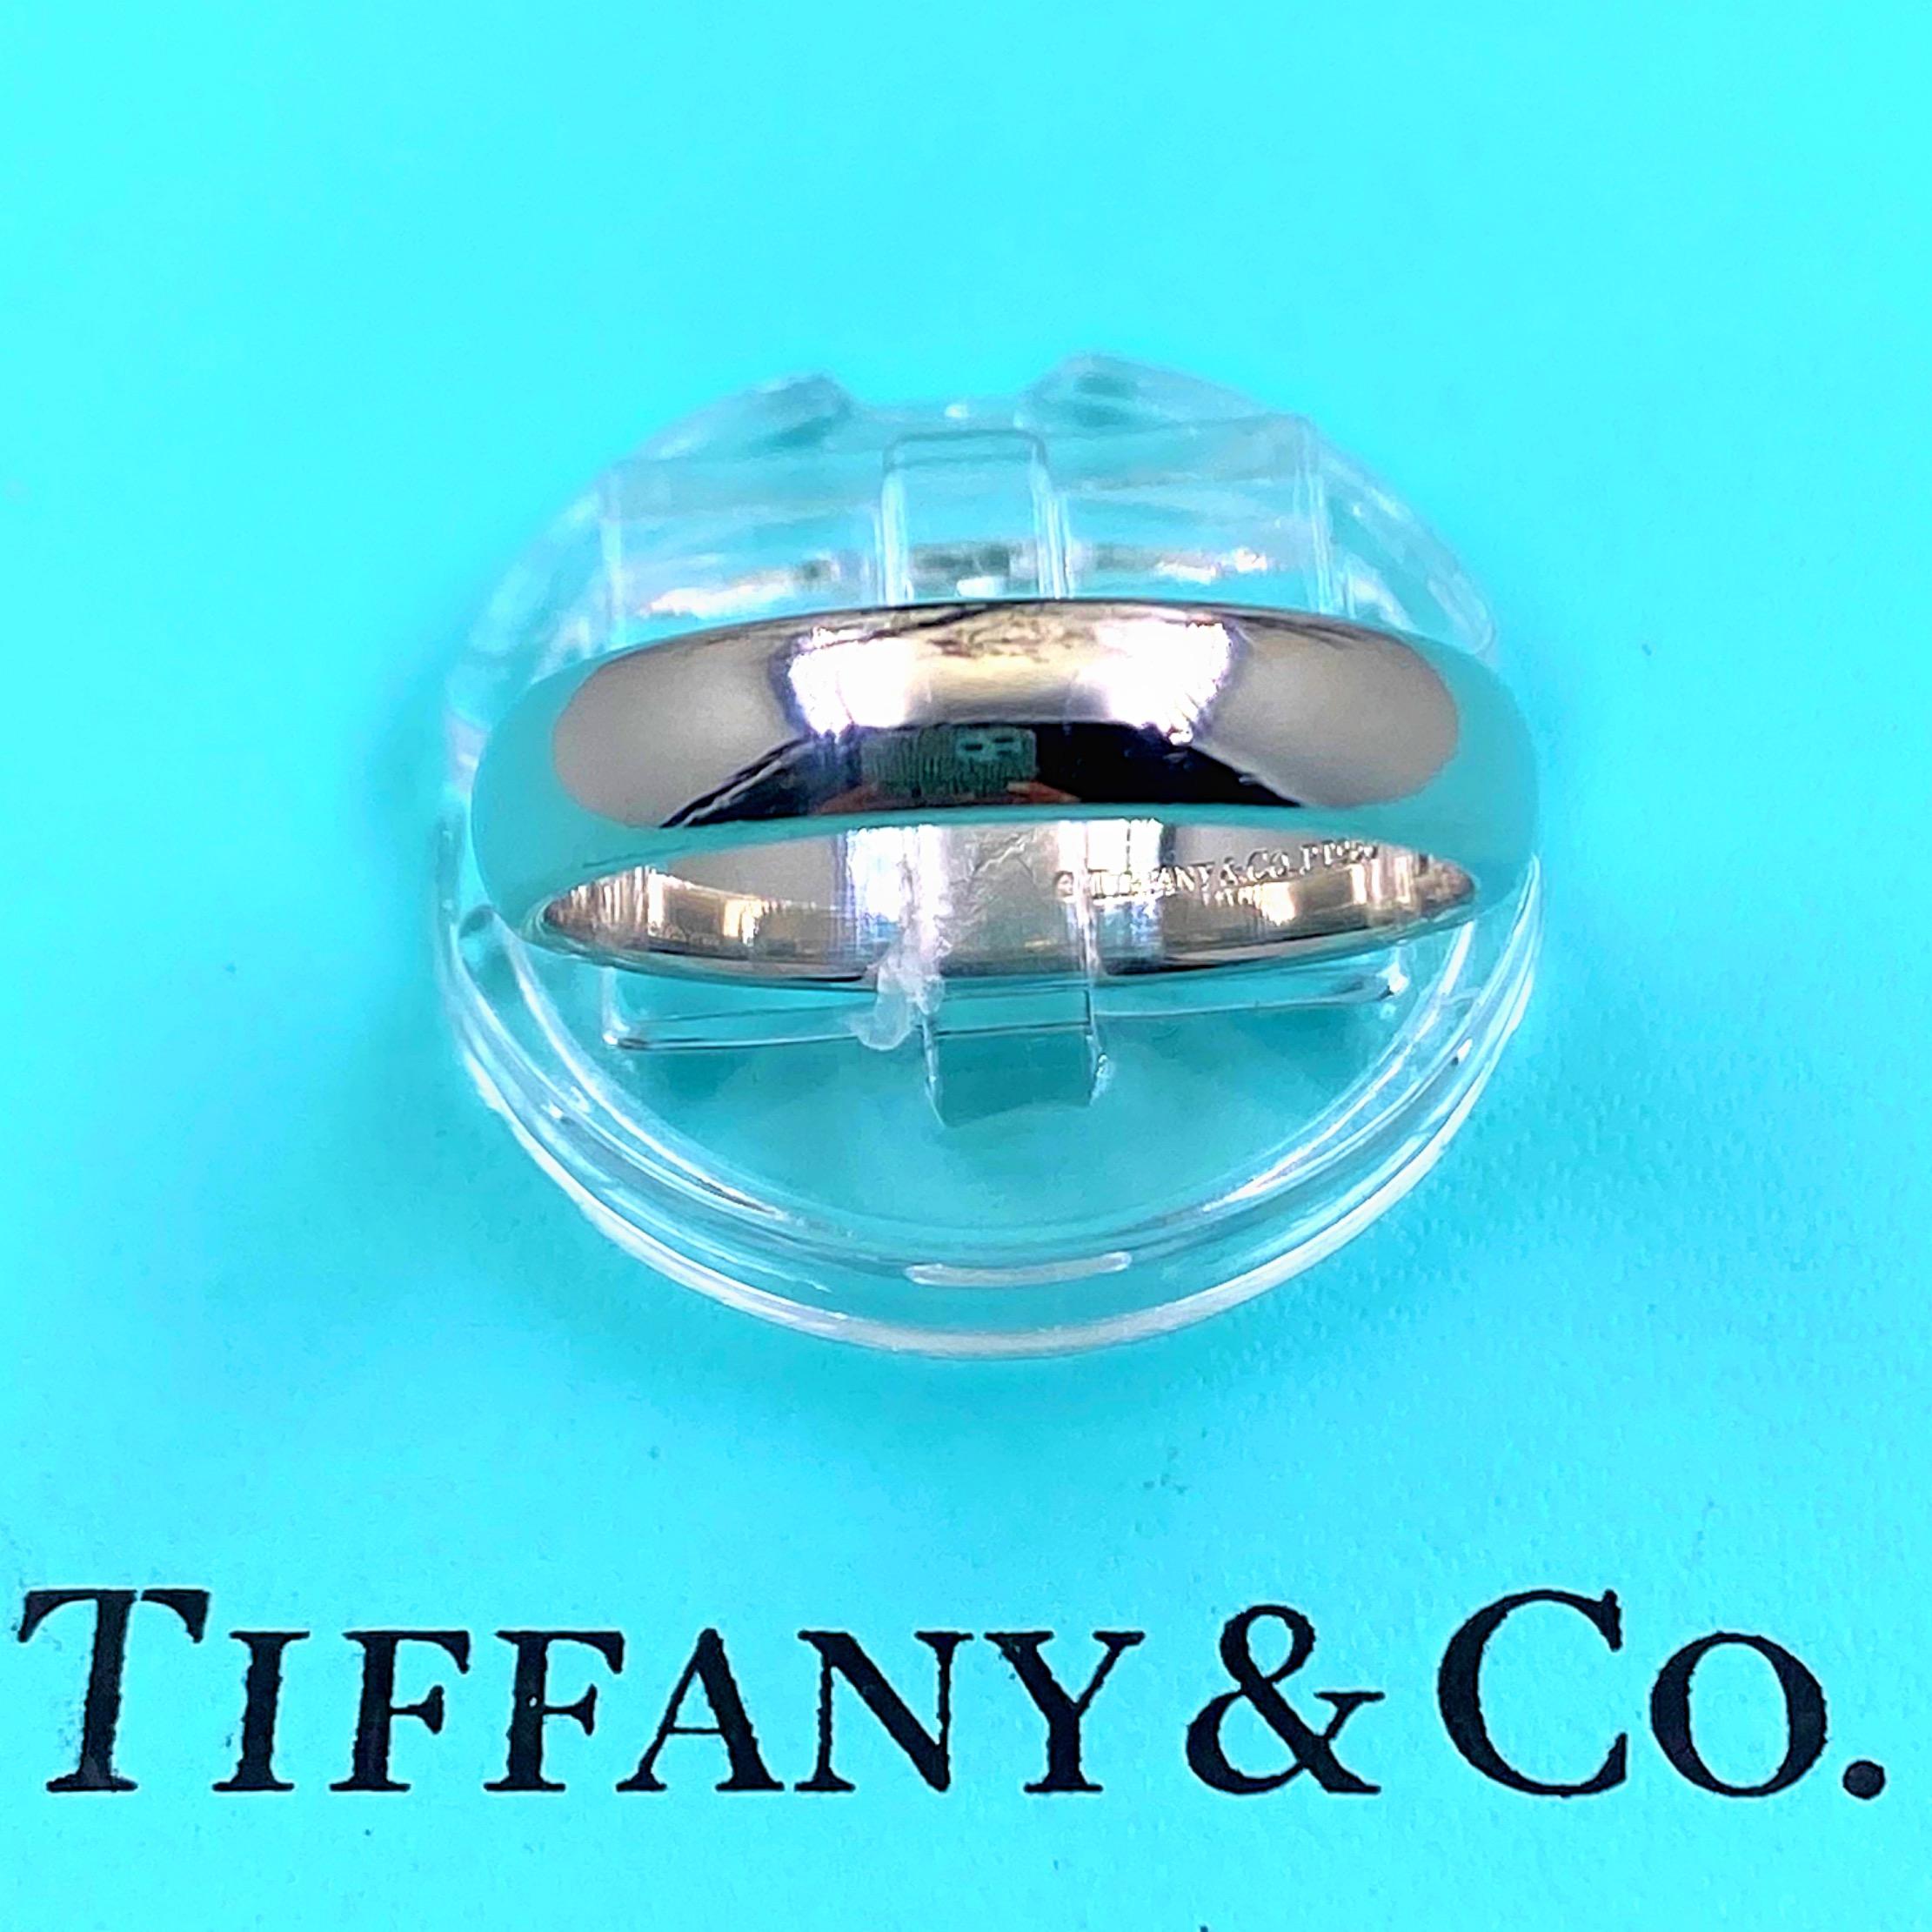 Tiffany & Co Classic Wedding Band Ring
Style:  Tiffany Classic
Metal:  Platinum PT950
Size:  9.5 - sizable
Measurements:  4.5 MM 
Hallmark:  ©TIFFANY&CO. PT950
Retail:  $1,450

Sku#1948TLK062320